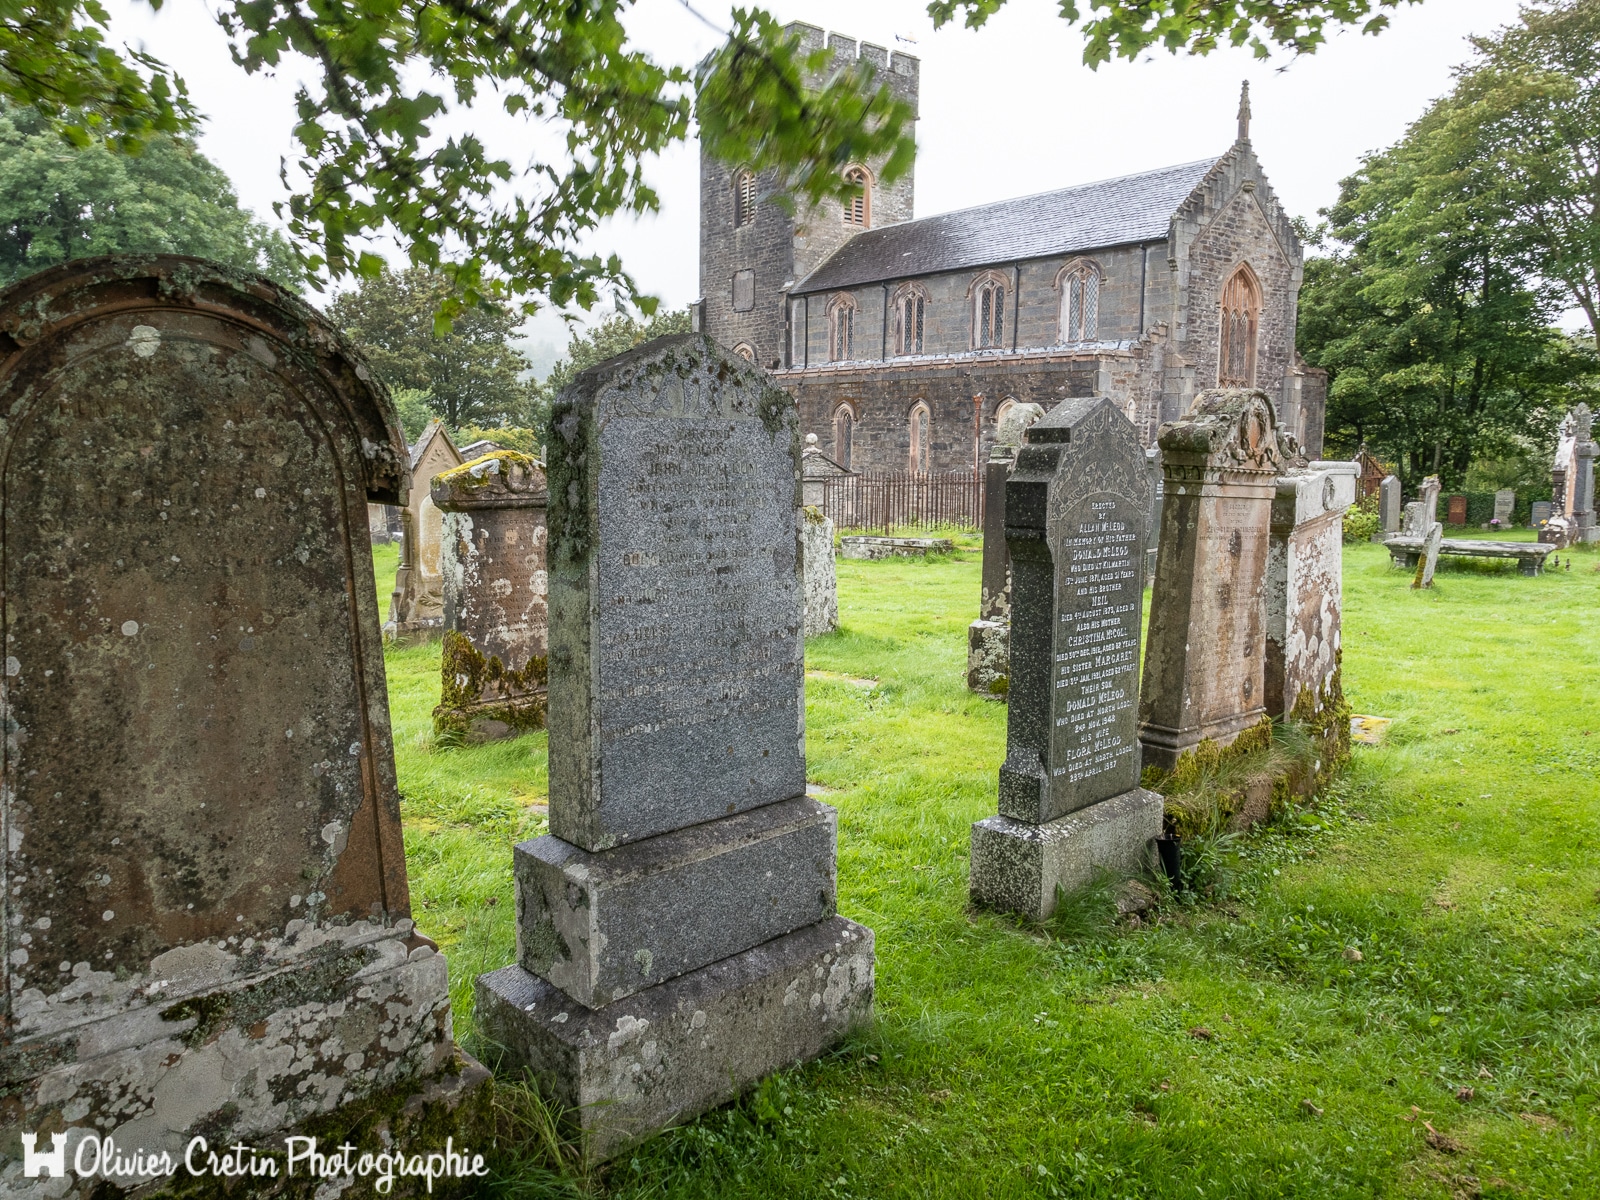 Ecosse - Le cimetière de Kilmartin